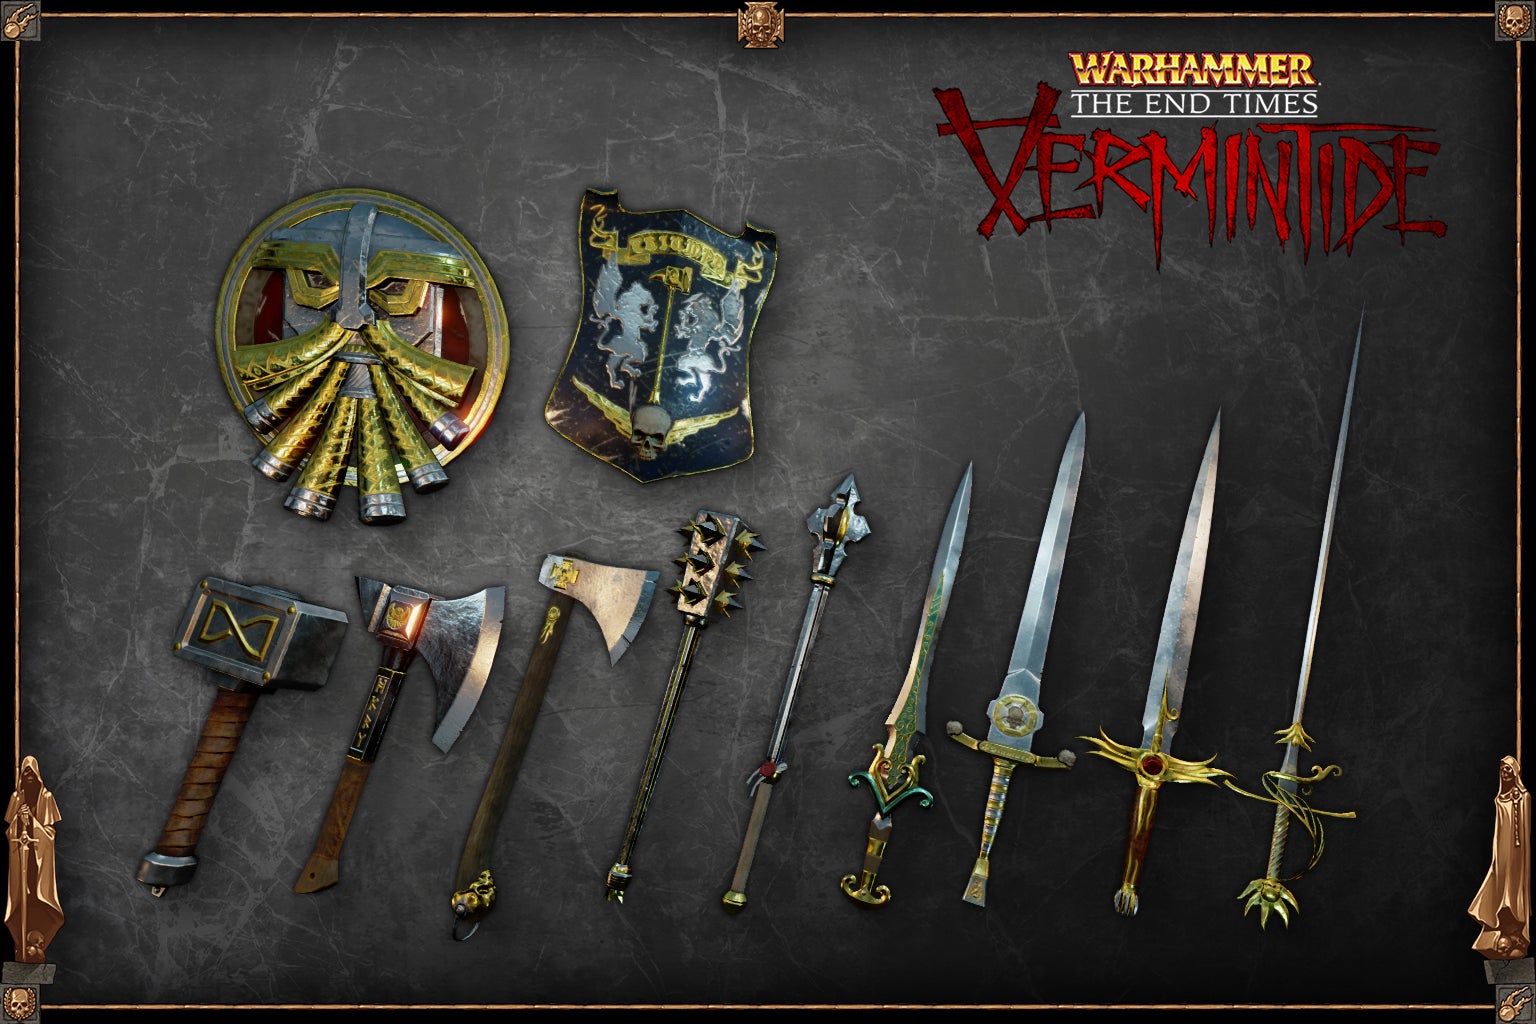 Free upcoming Warhammer Vermintide content revealed | Eurogamer.net